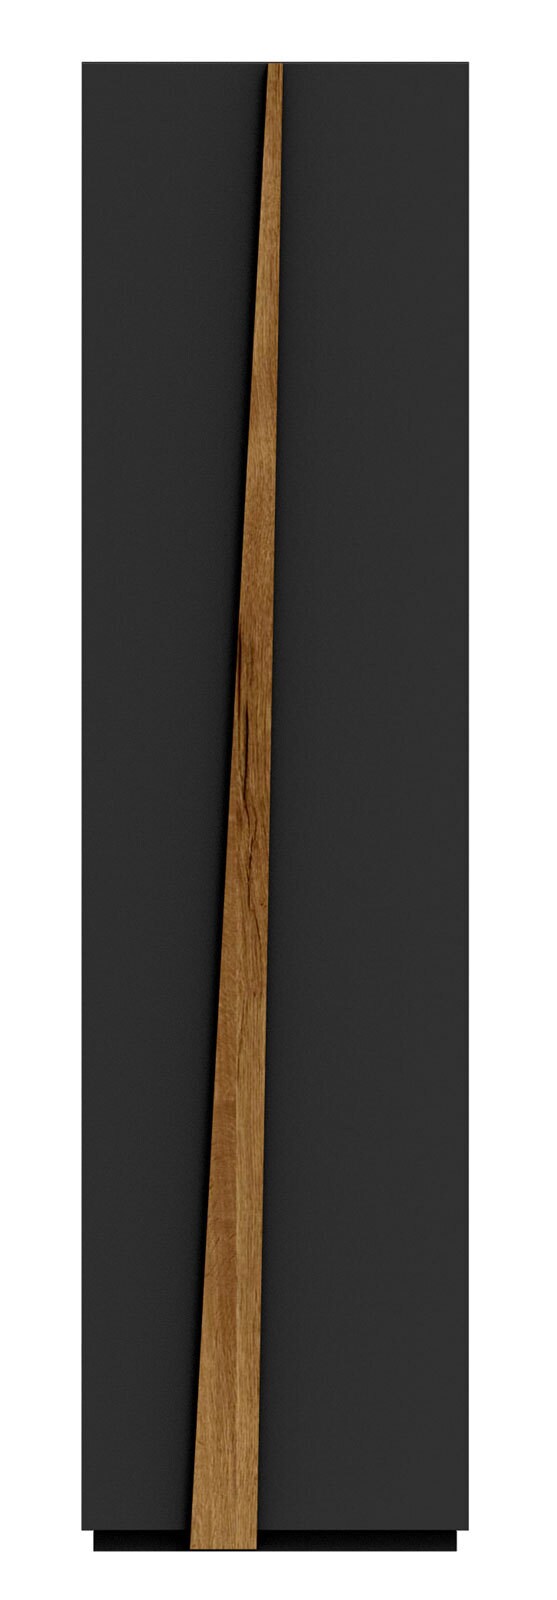 CASAVANTI Mehrzweckschrank 66 x 194 cm grau/ braun